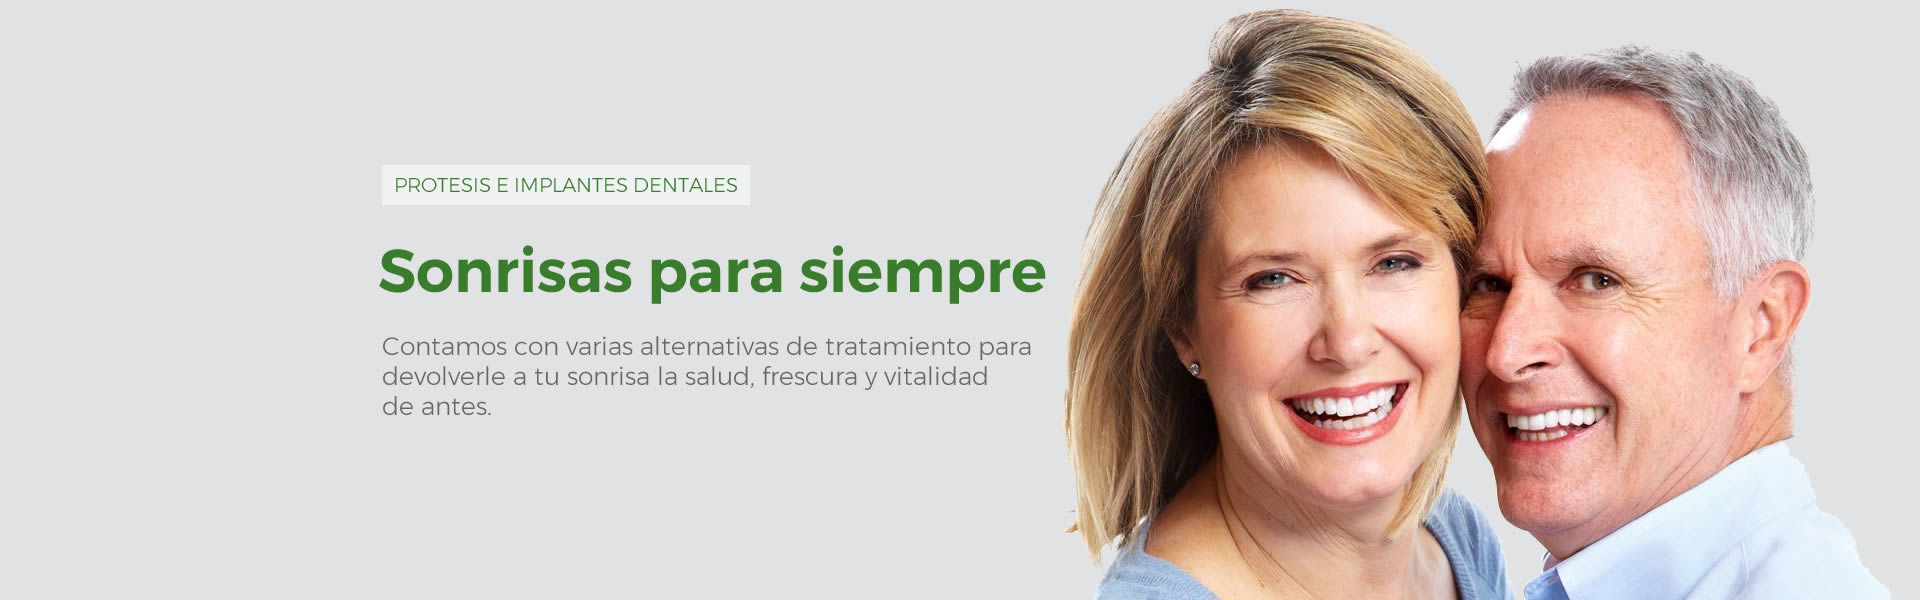 implantes-dentales-drablois-Buenos-Aires-clinica-dental